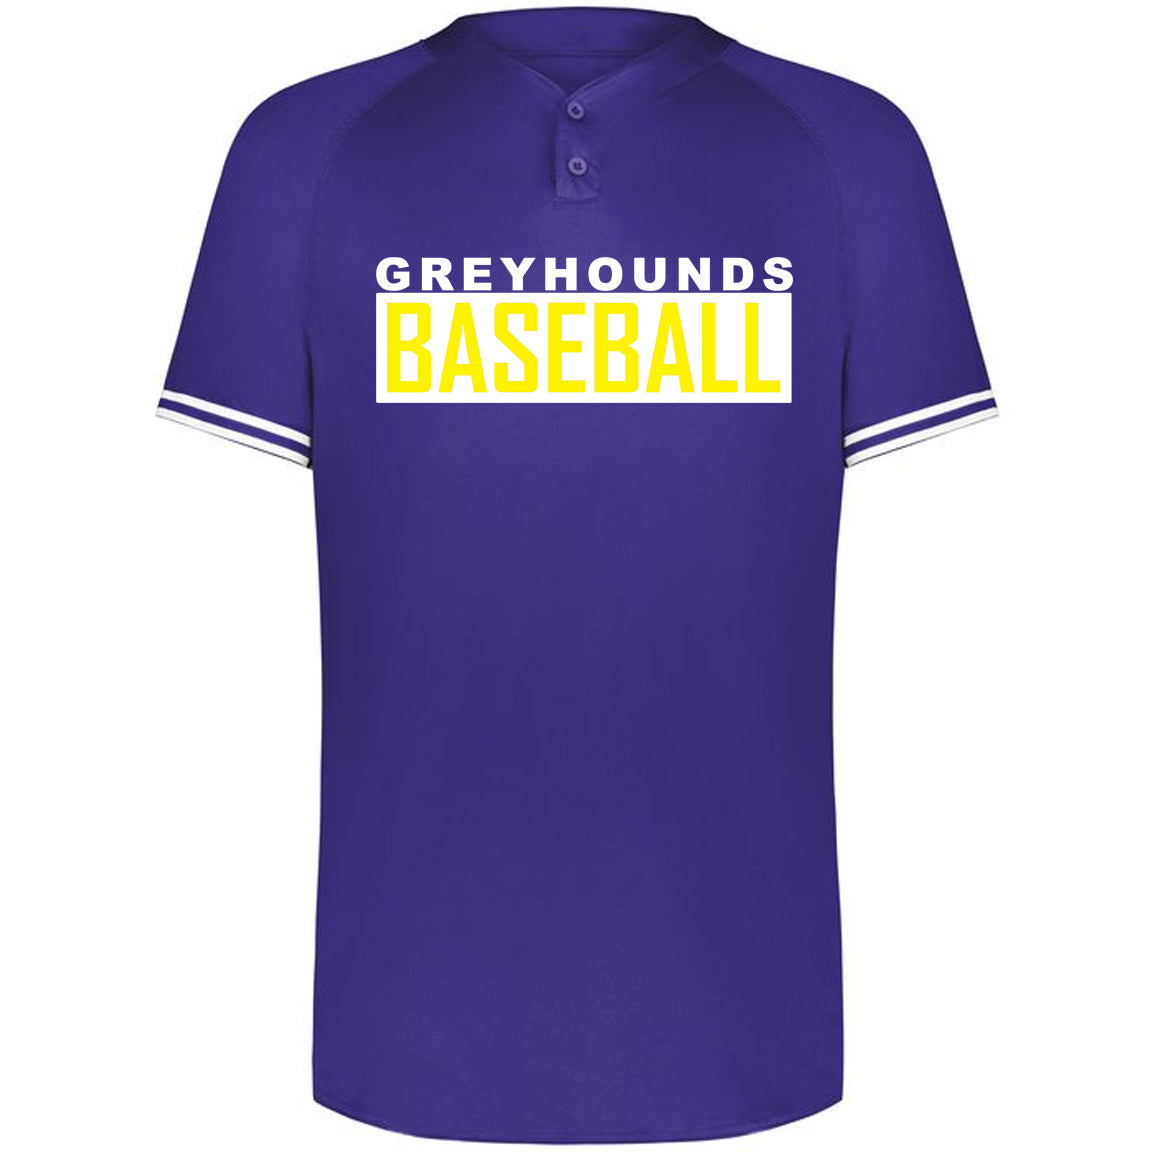 Jones County - Greyhounds Baseball 1 - Cutter+ Henley Jersey - Purple - Southern Grace Creations